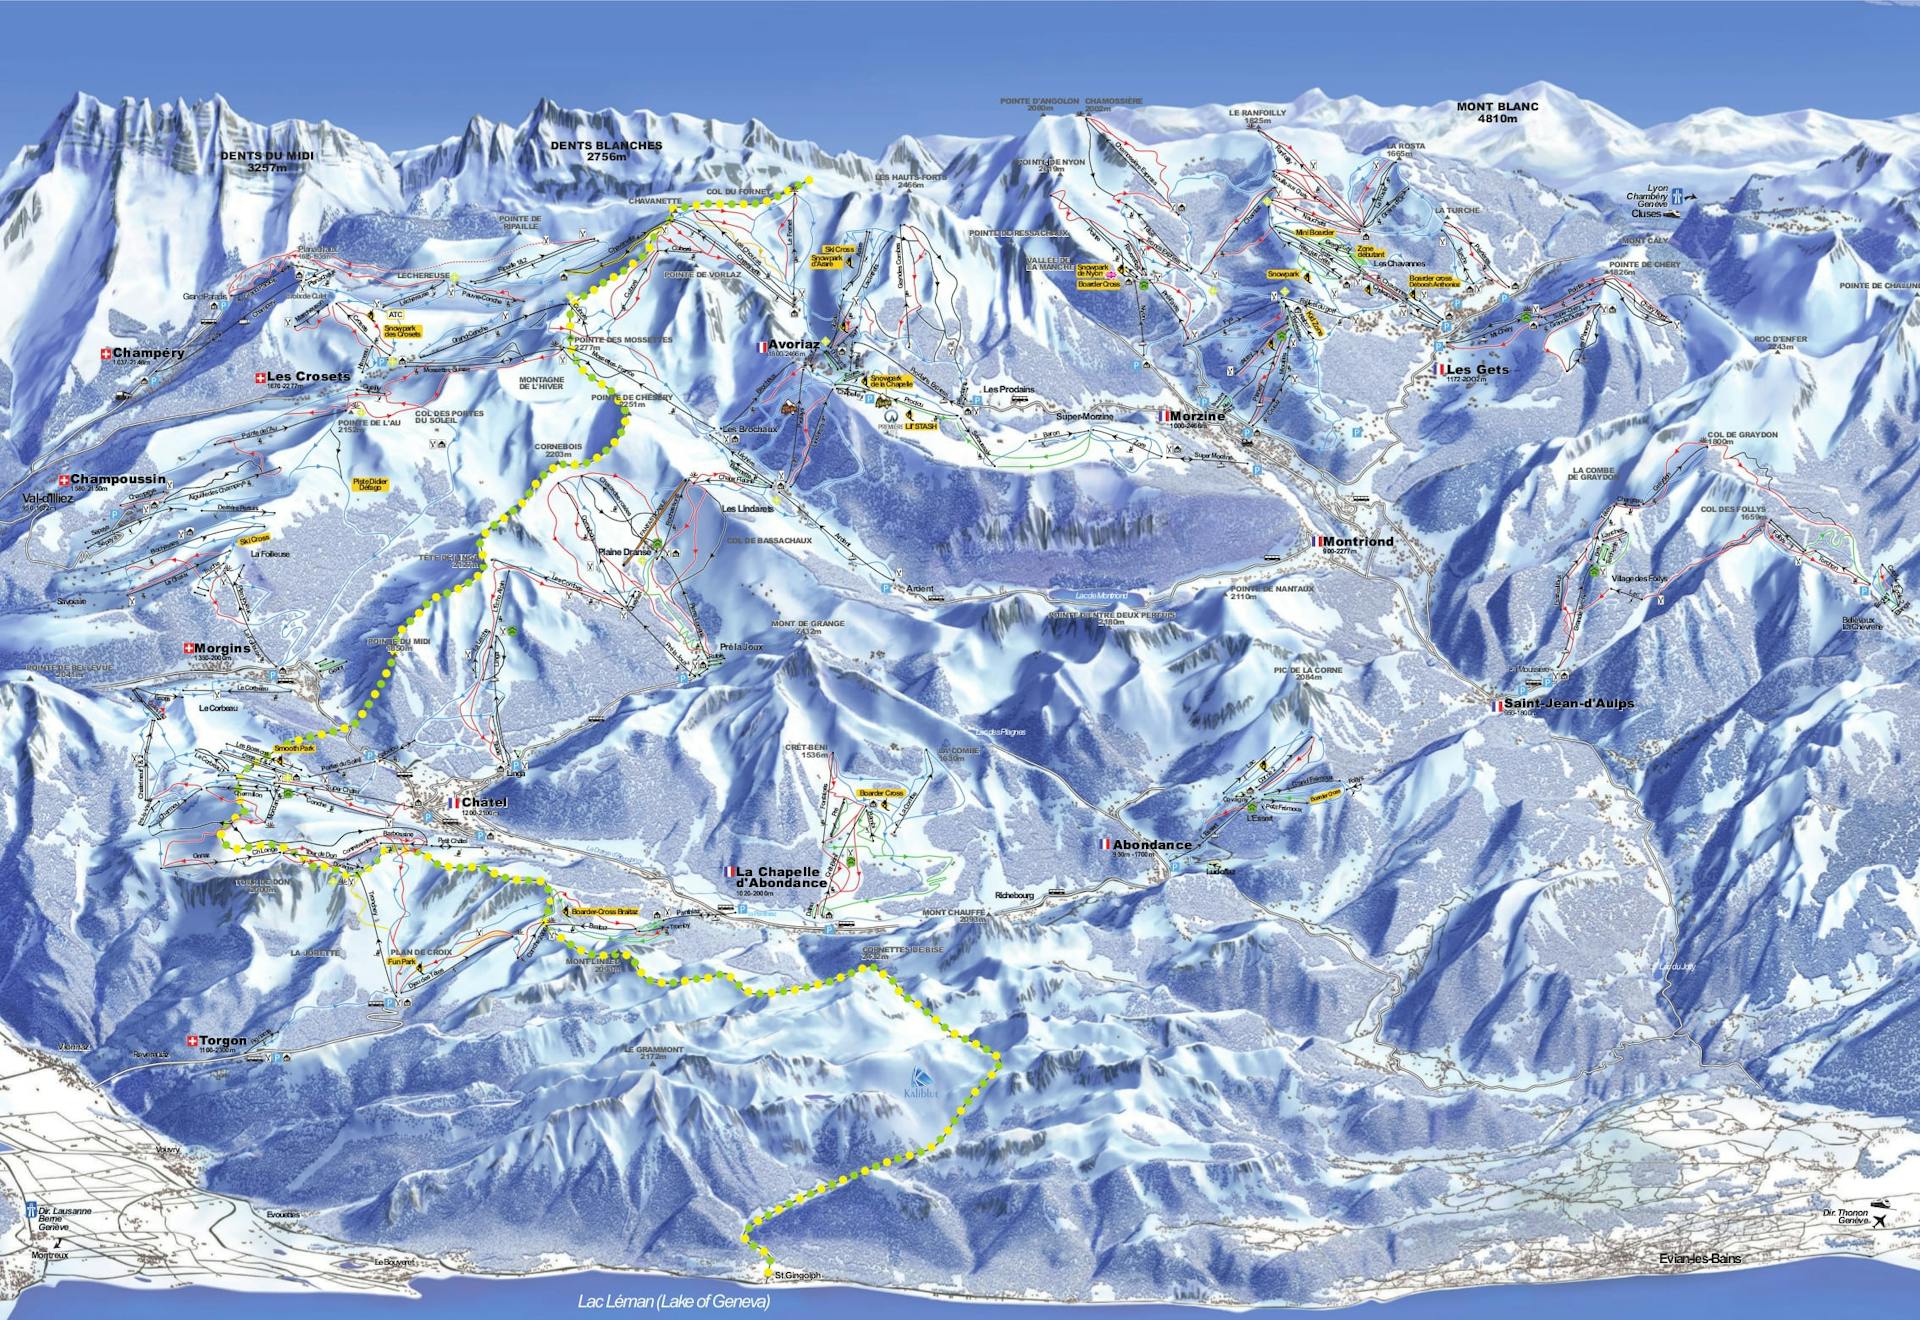 Avoriaz ski map